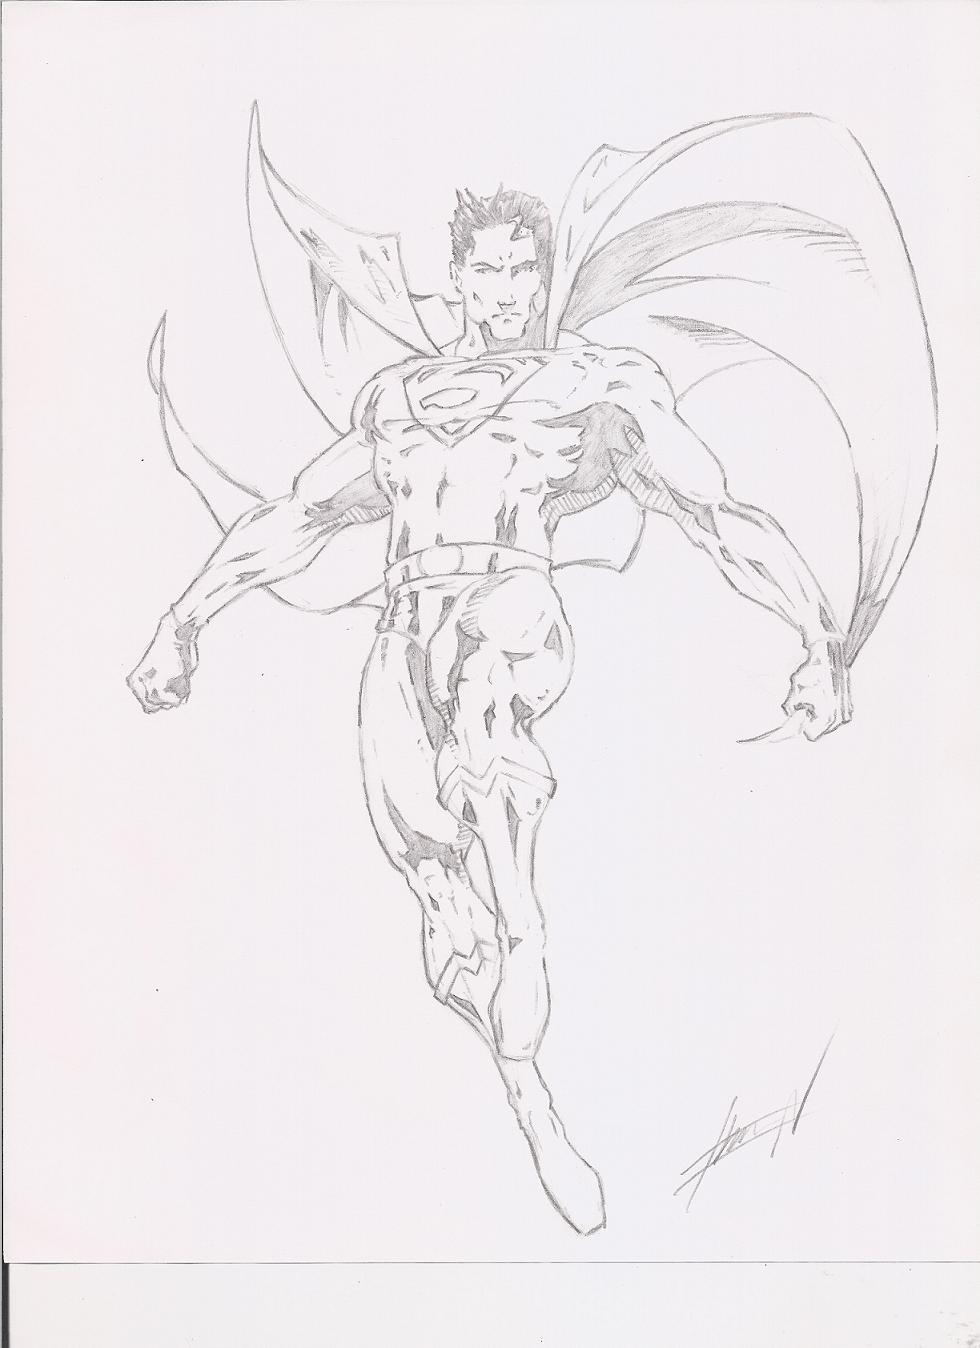 Superman by chevronlowery